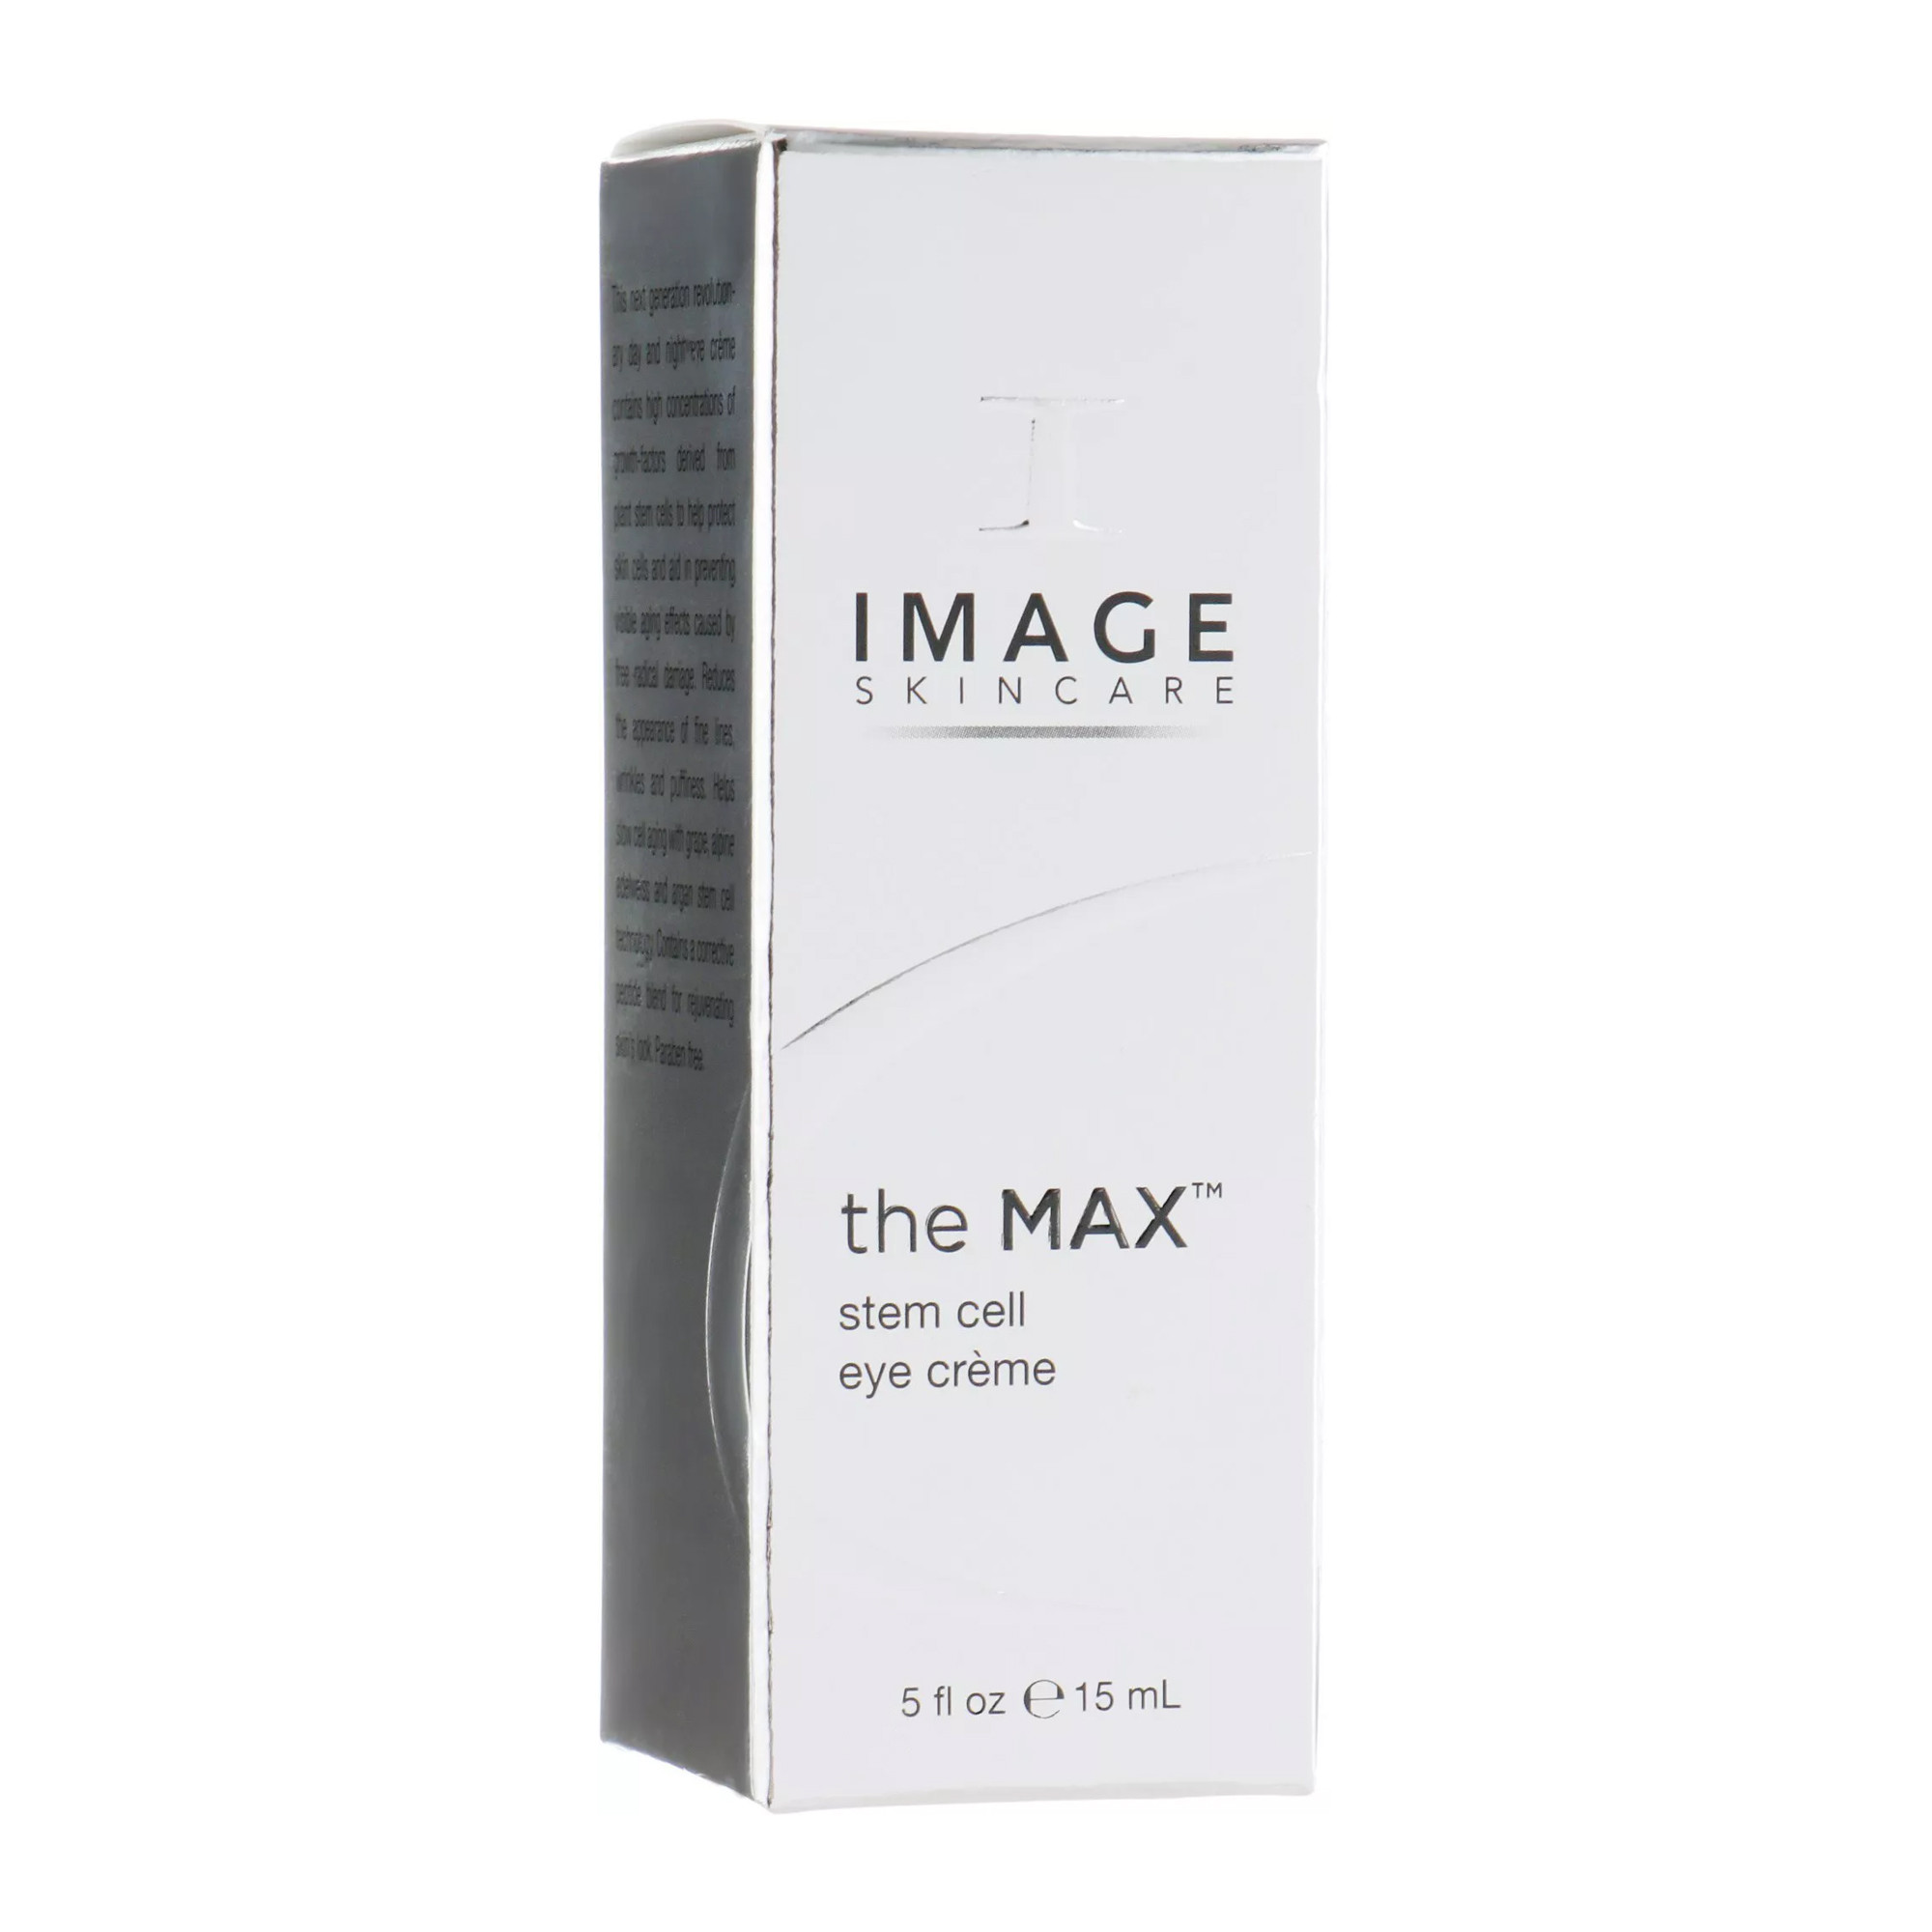 image skincare the max stem cell eye creme цена